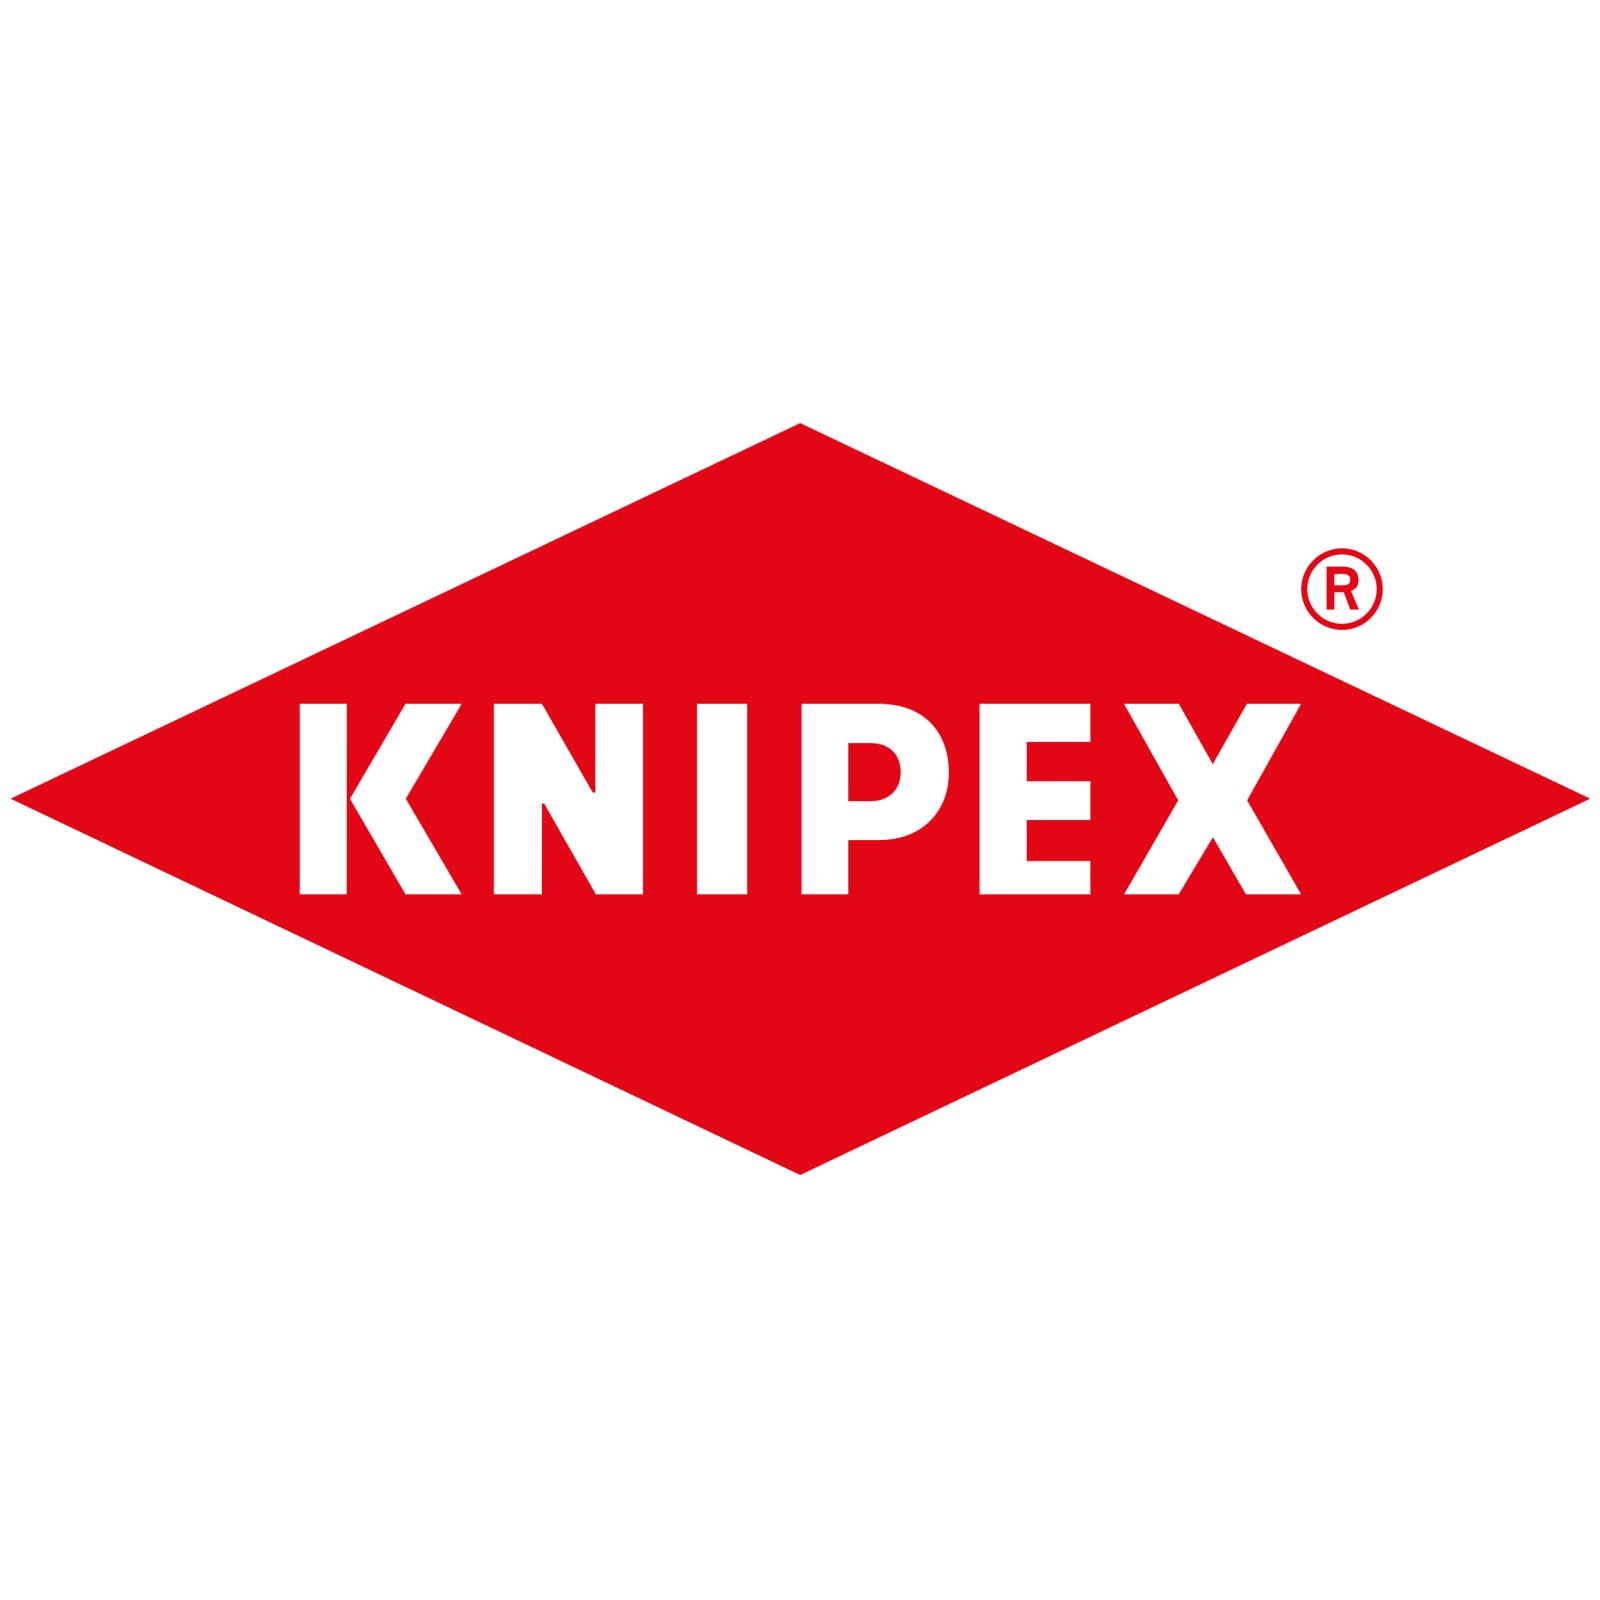 Knipex_logo